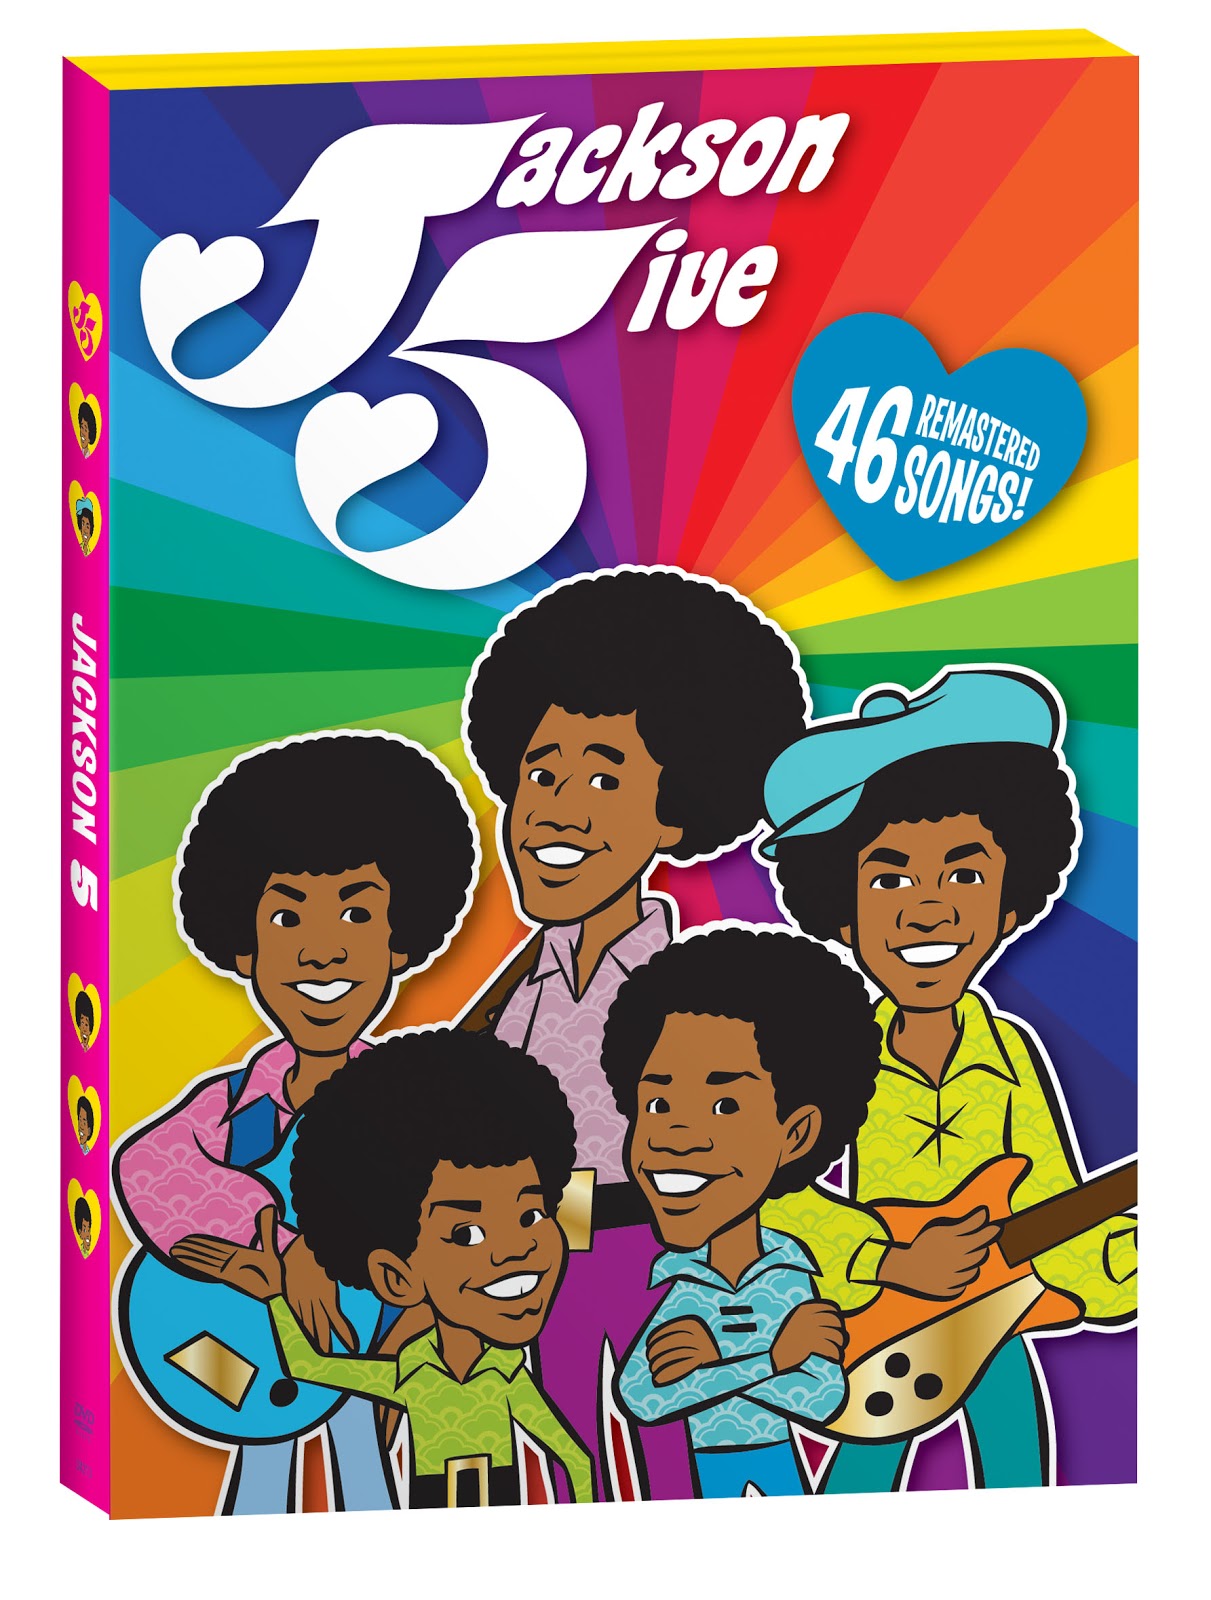 Dvd Blu Ray News Jackson 5ive The Complete Animated